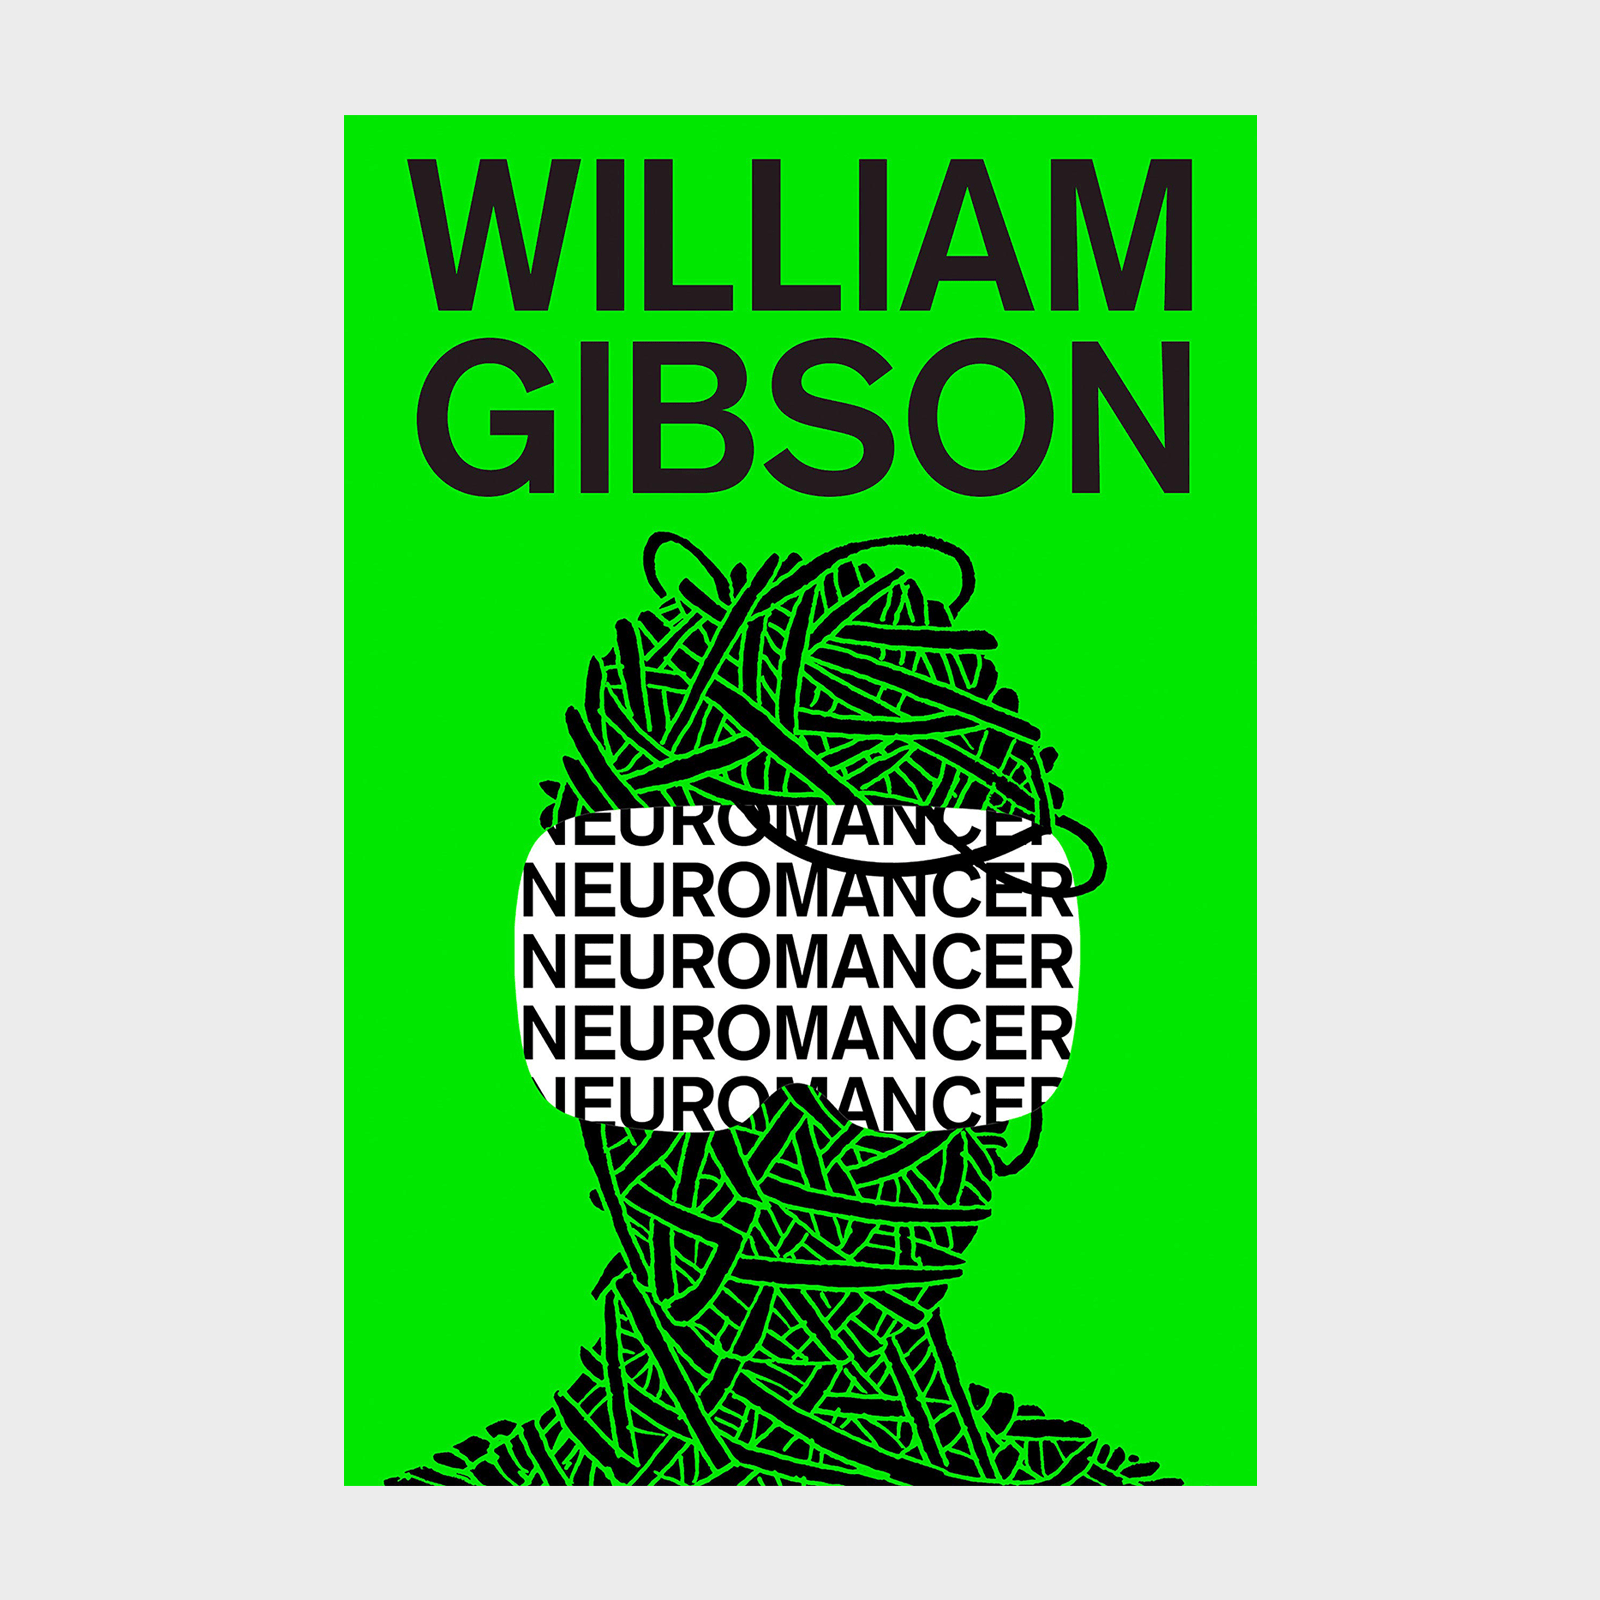 Neuromancer Gibson Ecomm Via Amazon.com